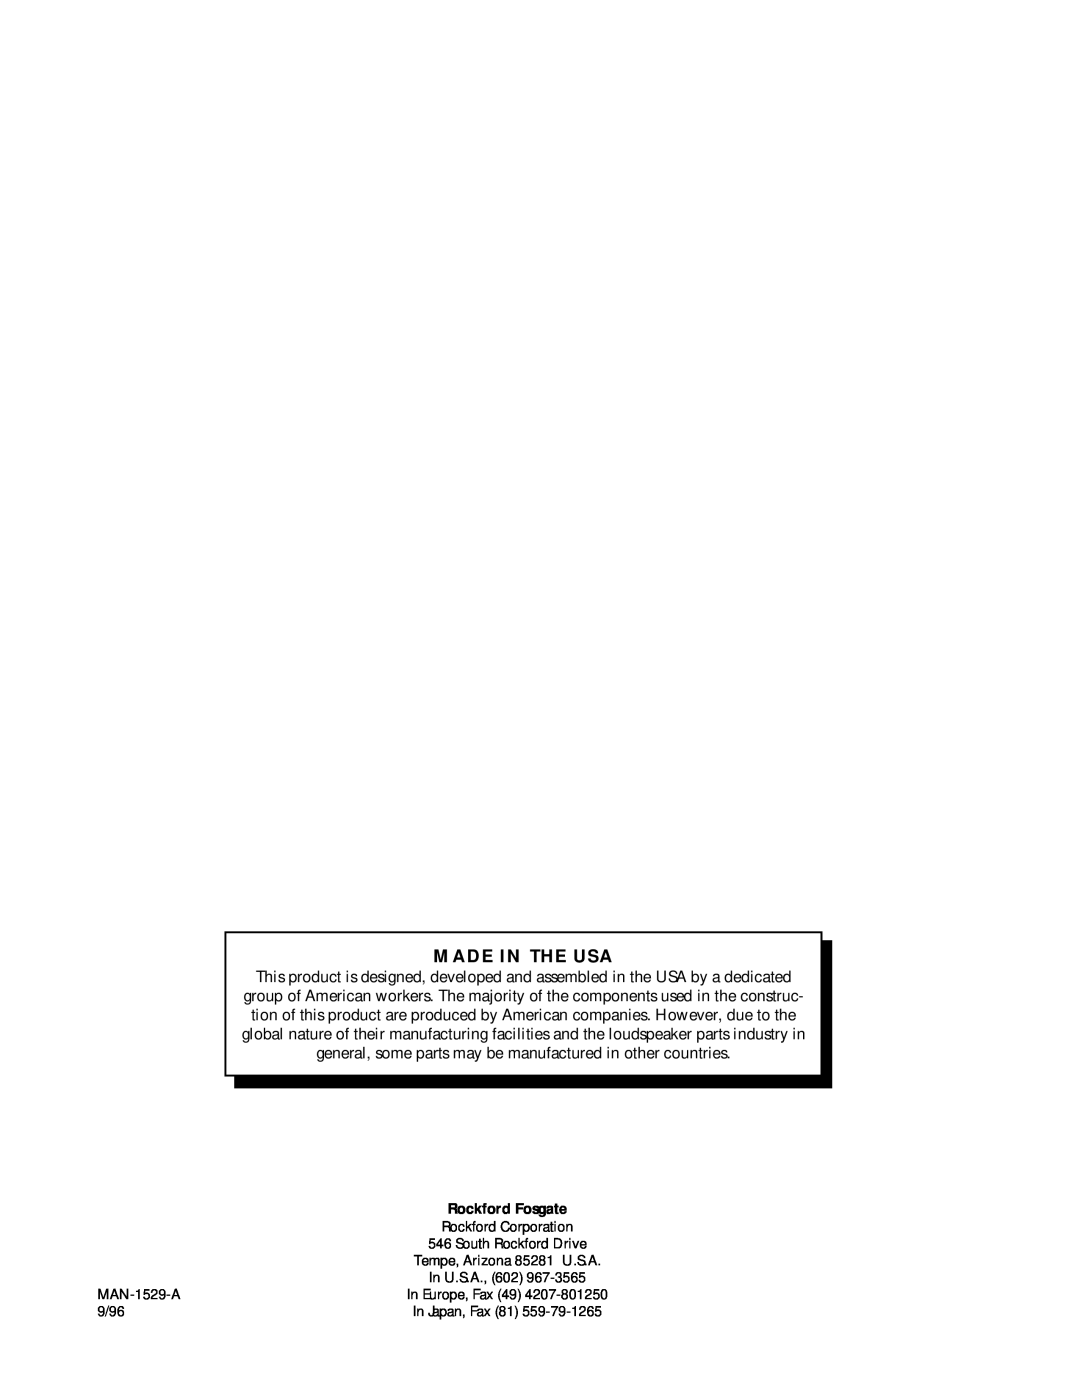 Rockford Fosgate 250.1 manual Made In The Usa 